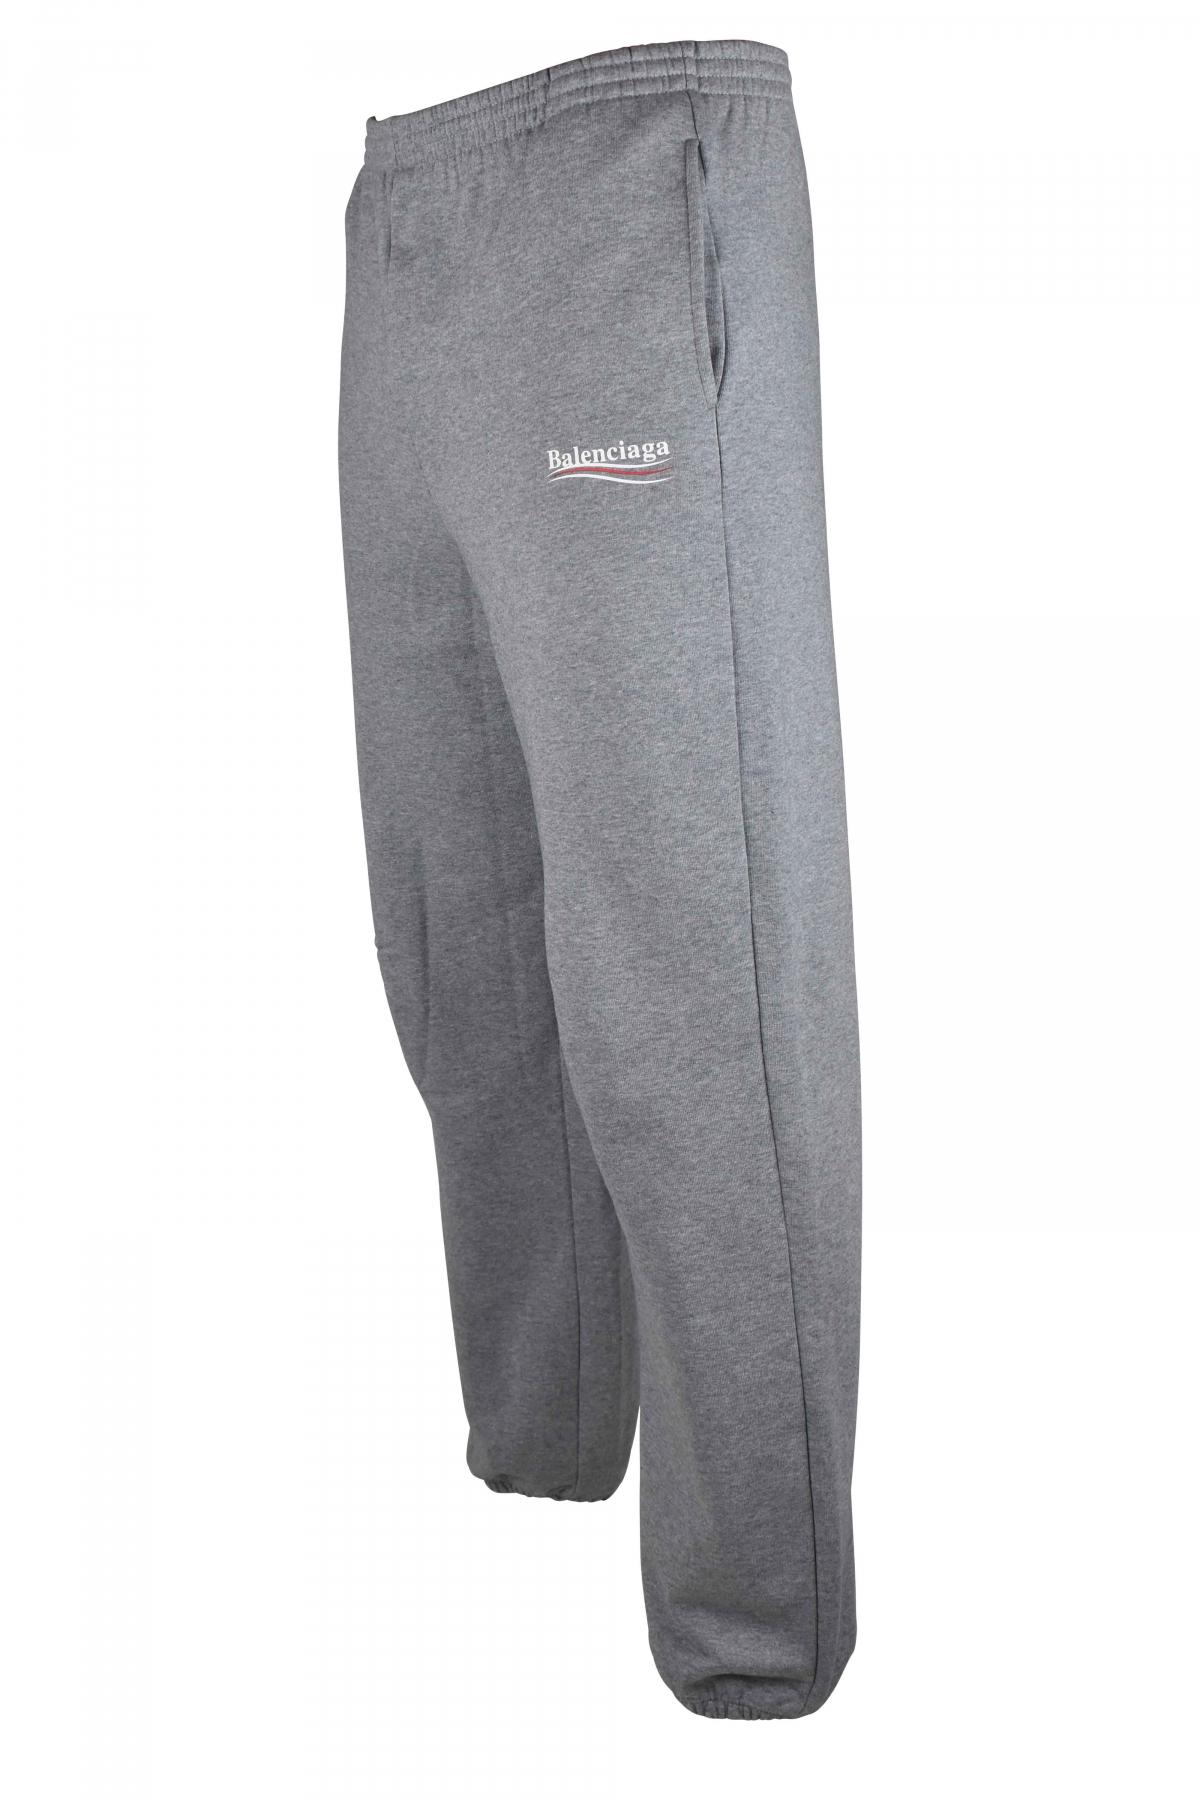 Balenciaga Jogging Pants in Gray | Lyst